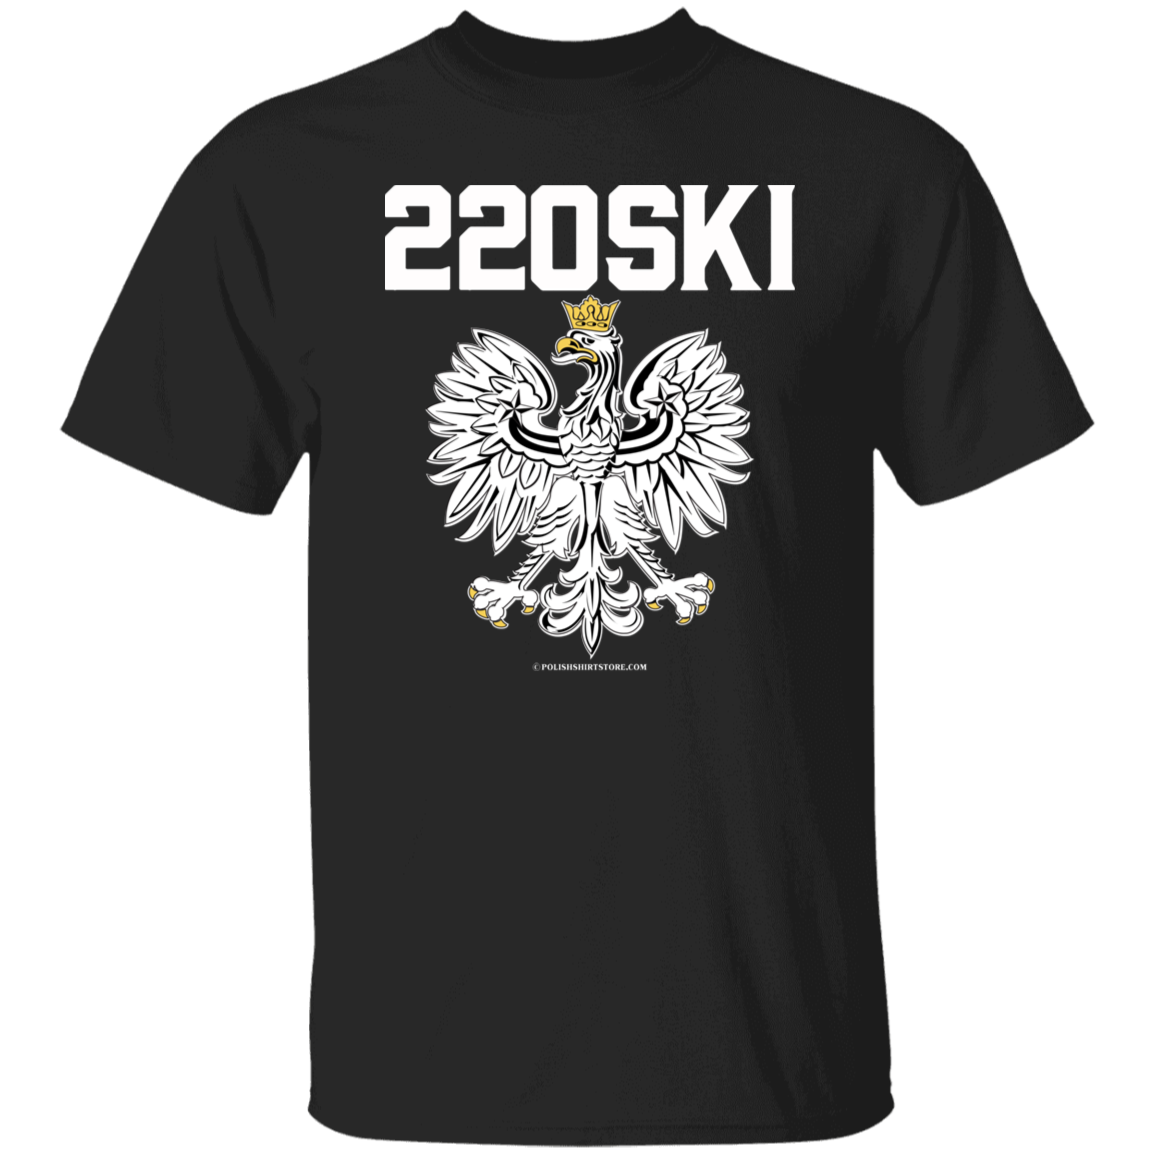 220SKI Apparel CustomCat G500 5.3 oz. T-Shirt Black S